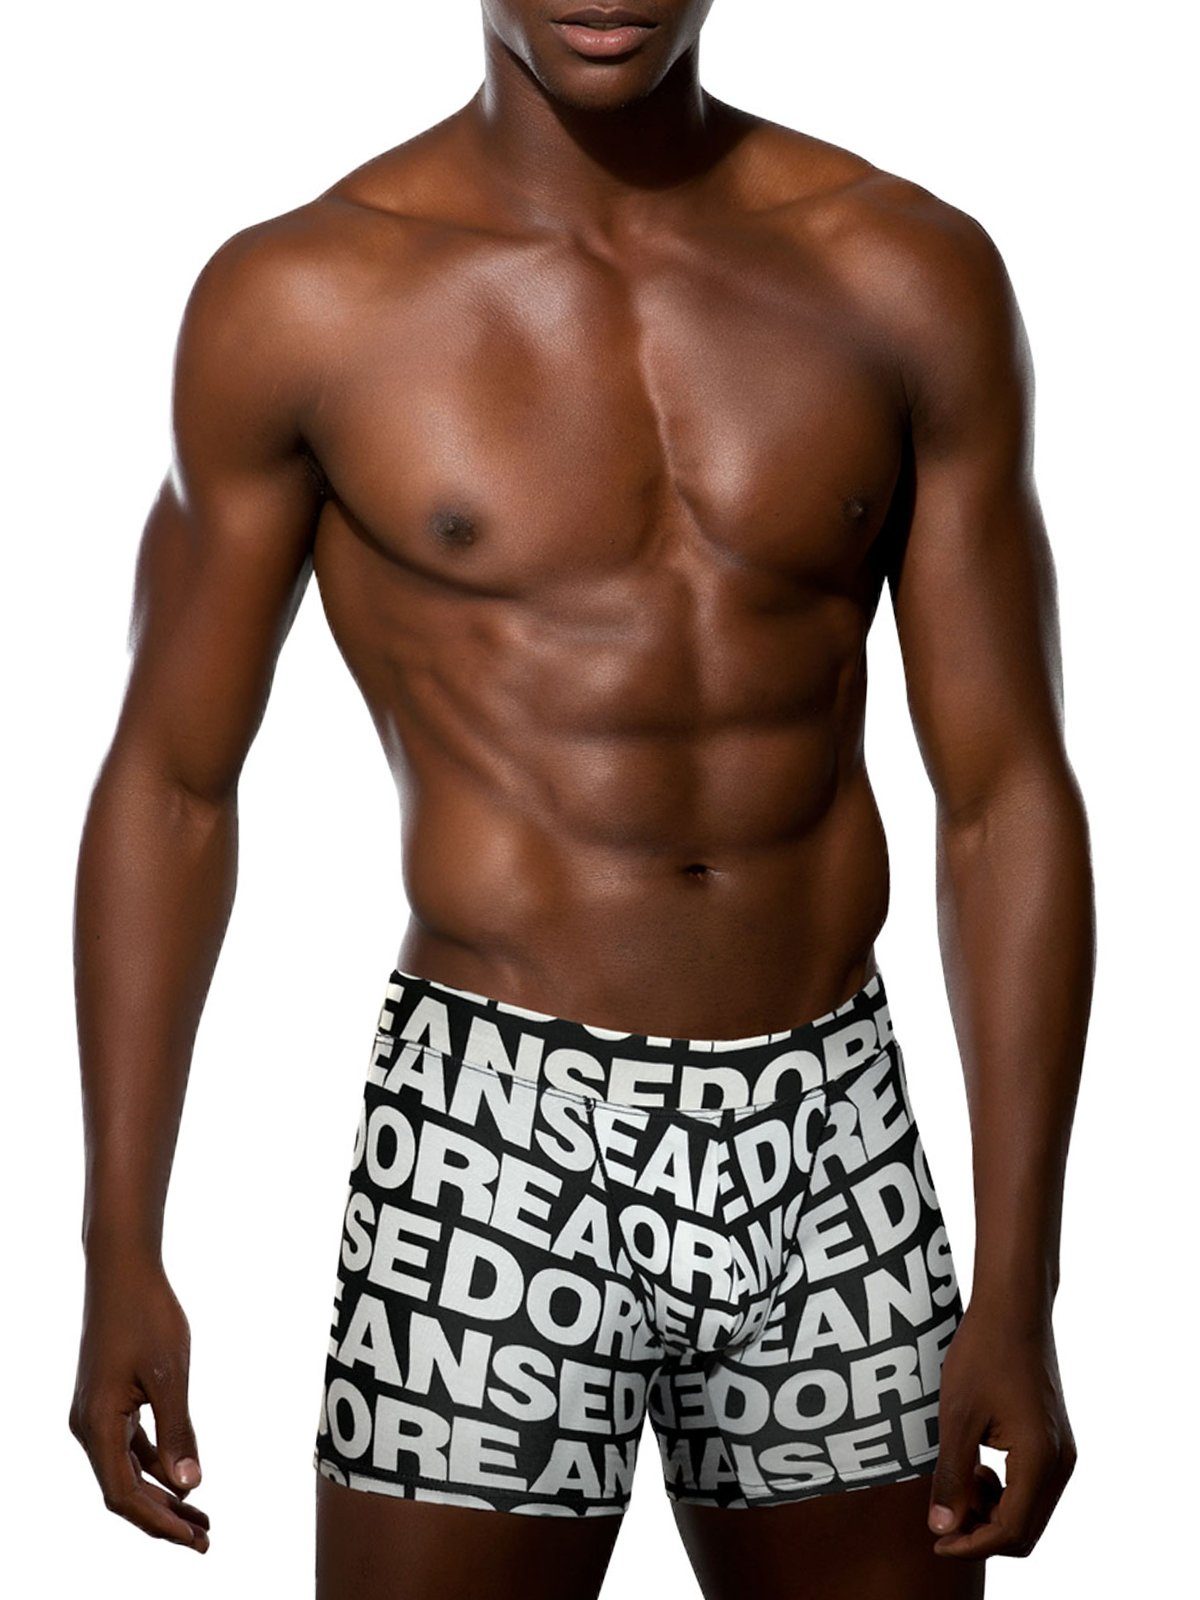 Männer Imprime Pants, Herren Boxer Boxershorts Underwear Doreanse Hipster DA1896